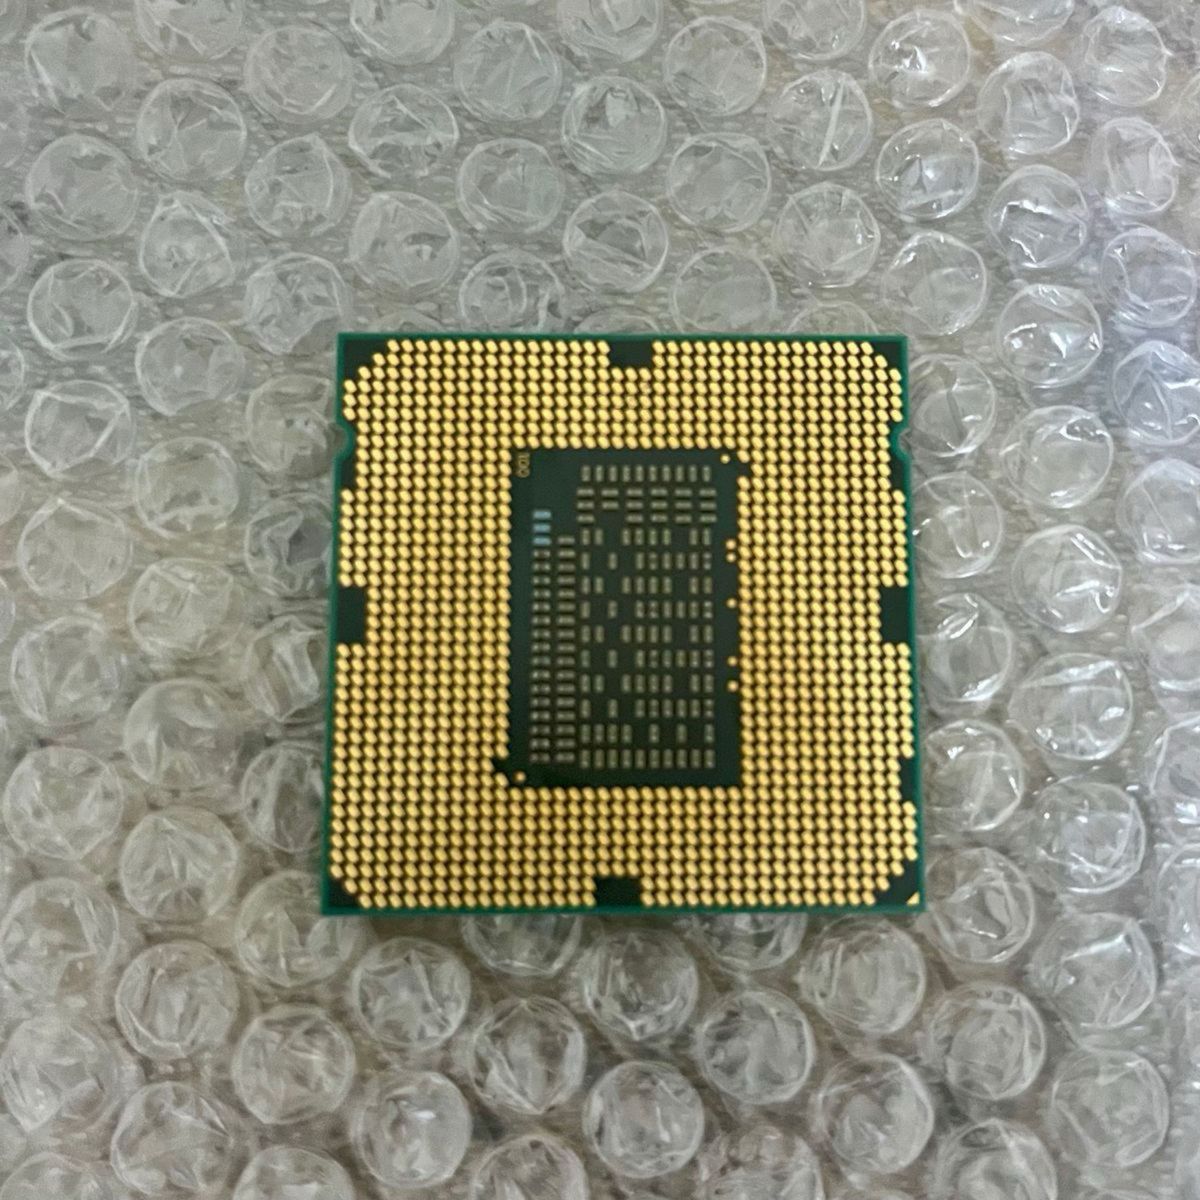 Intel Core i5 2320 CPUクーラーセット グリス付き